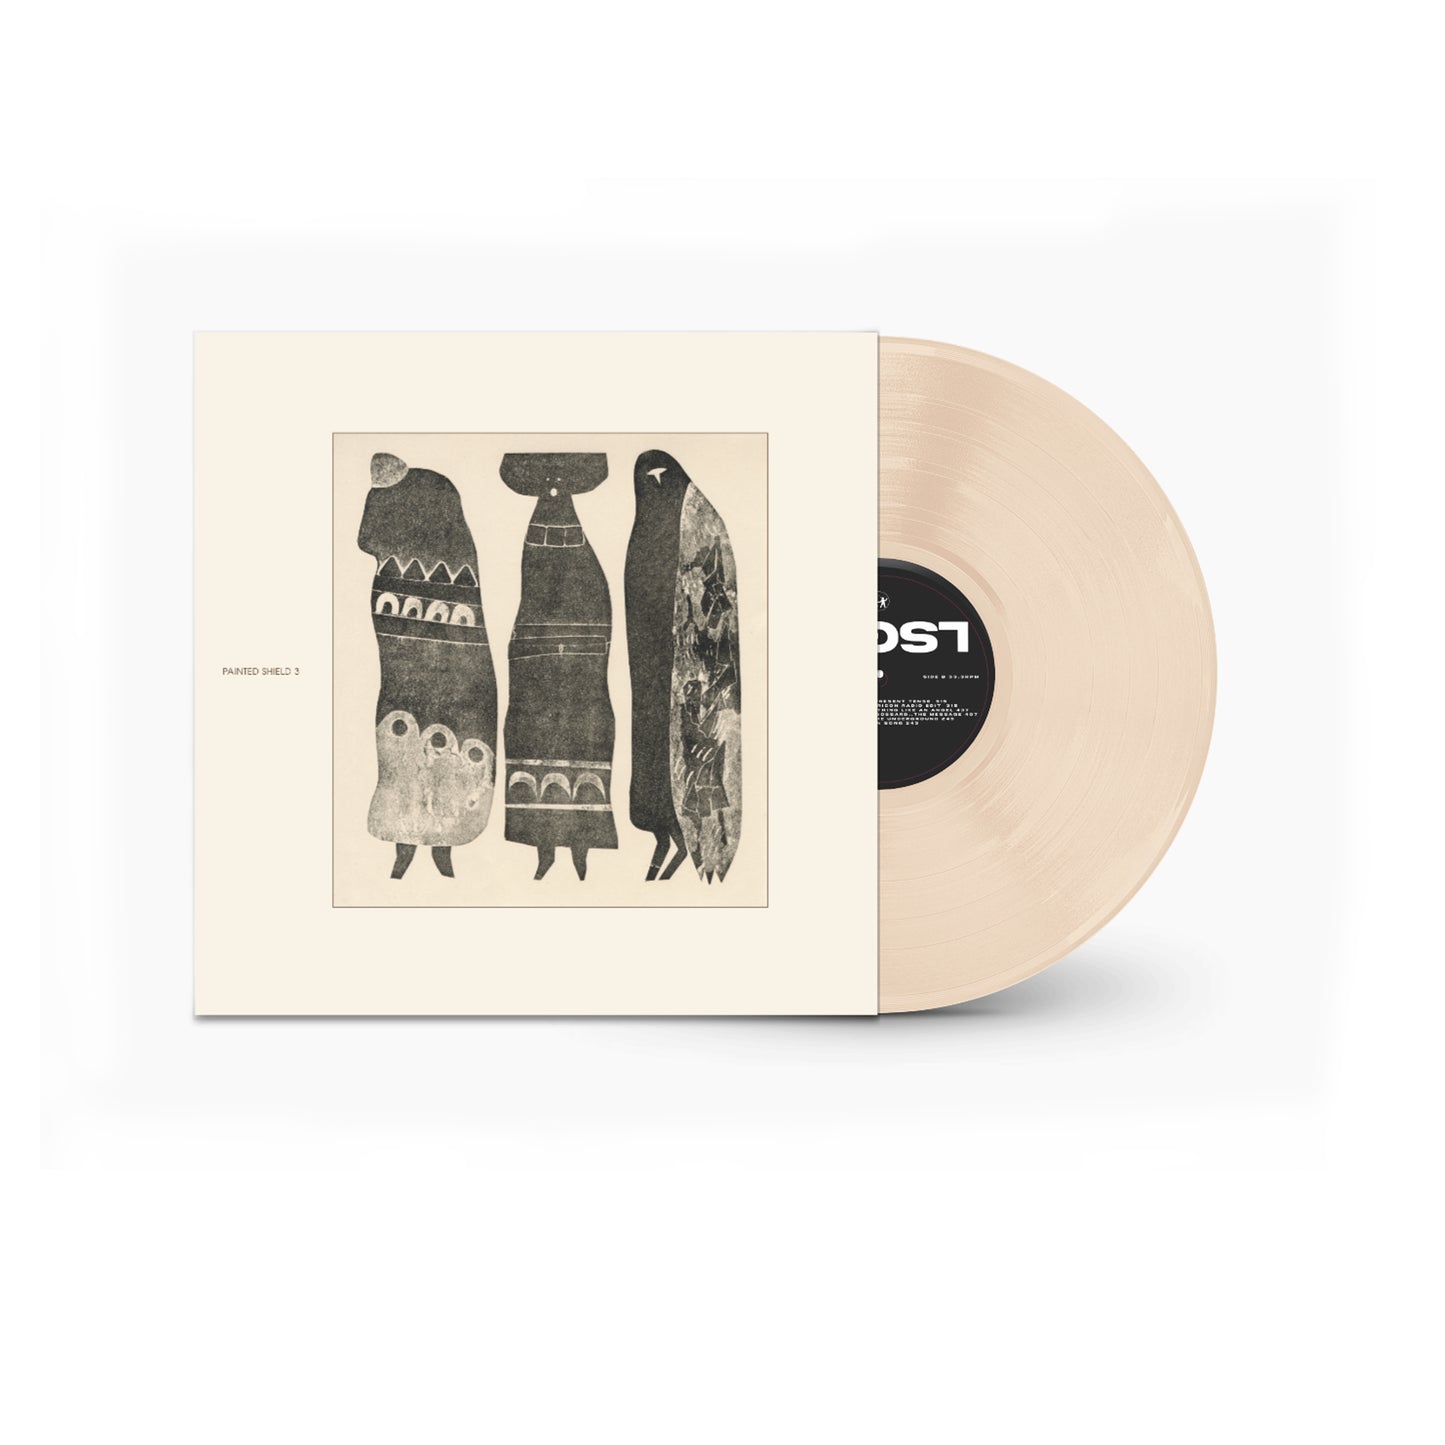 Painted Shield - Painted Shield 3 - Bone Vinyl LP